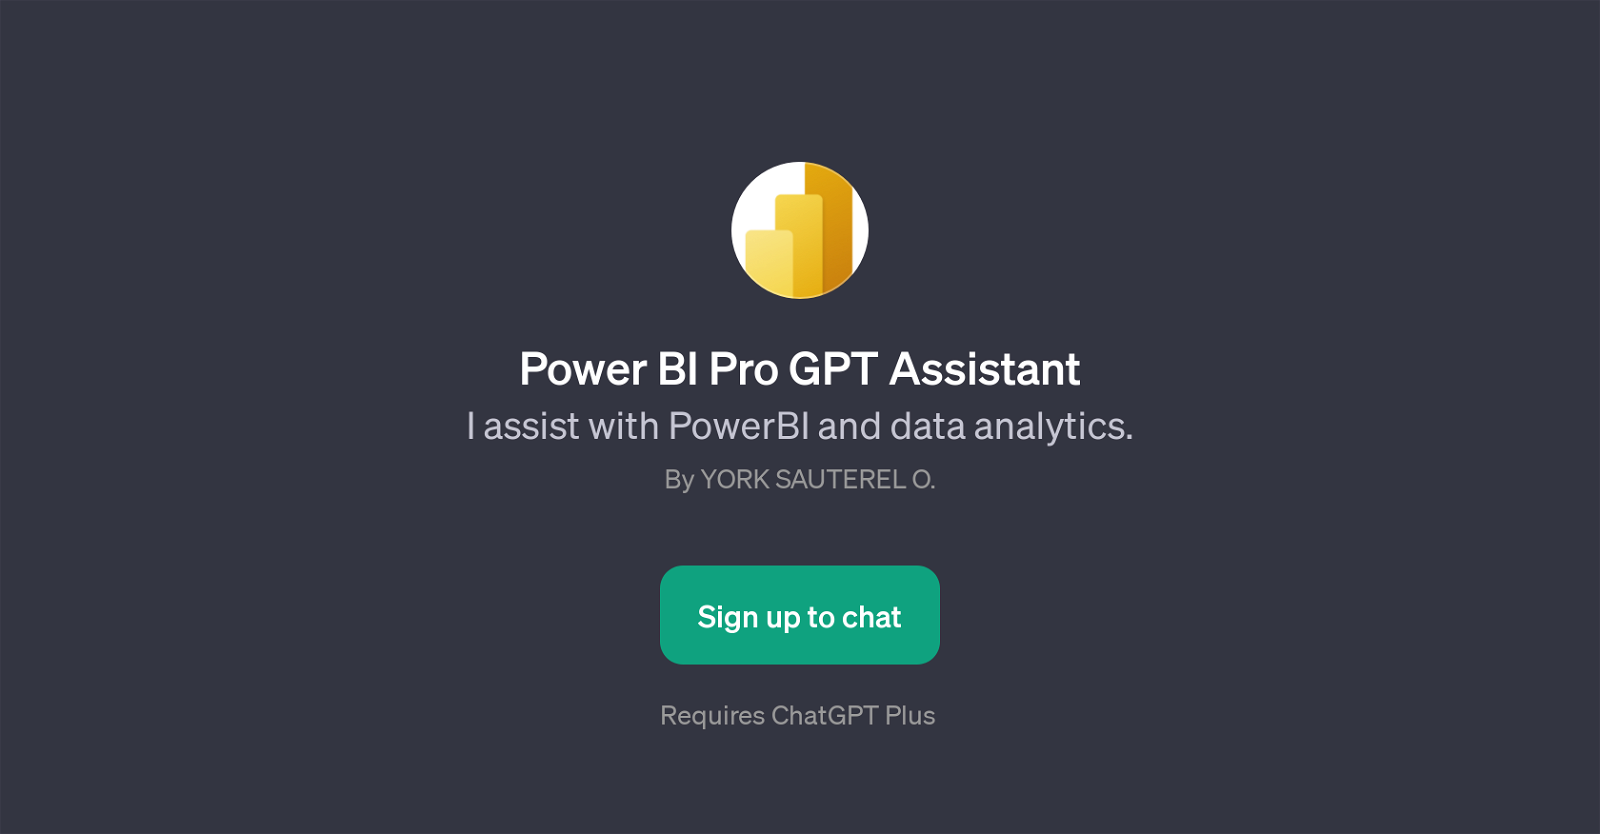 Power BI Pro GPT Assistant website